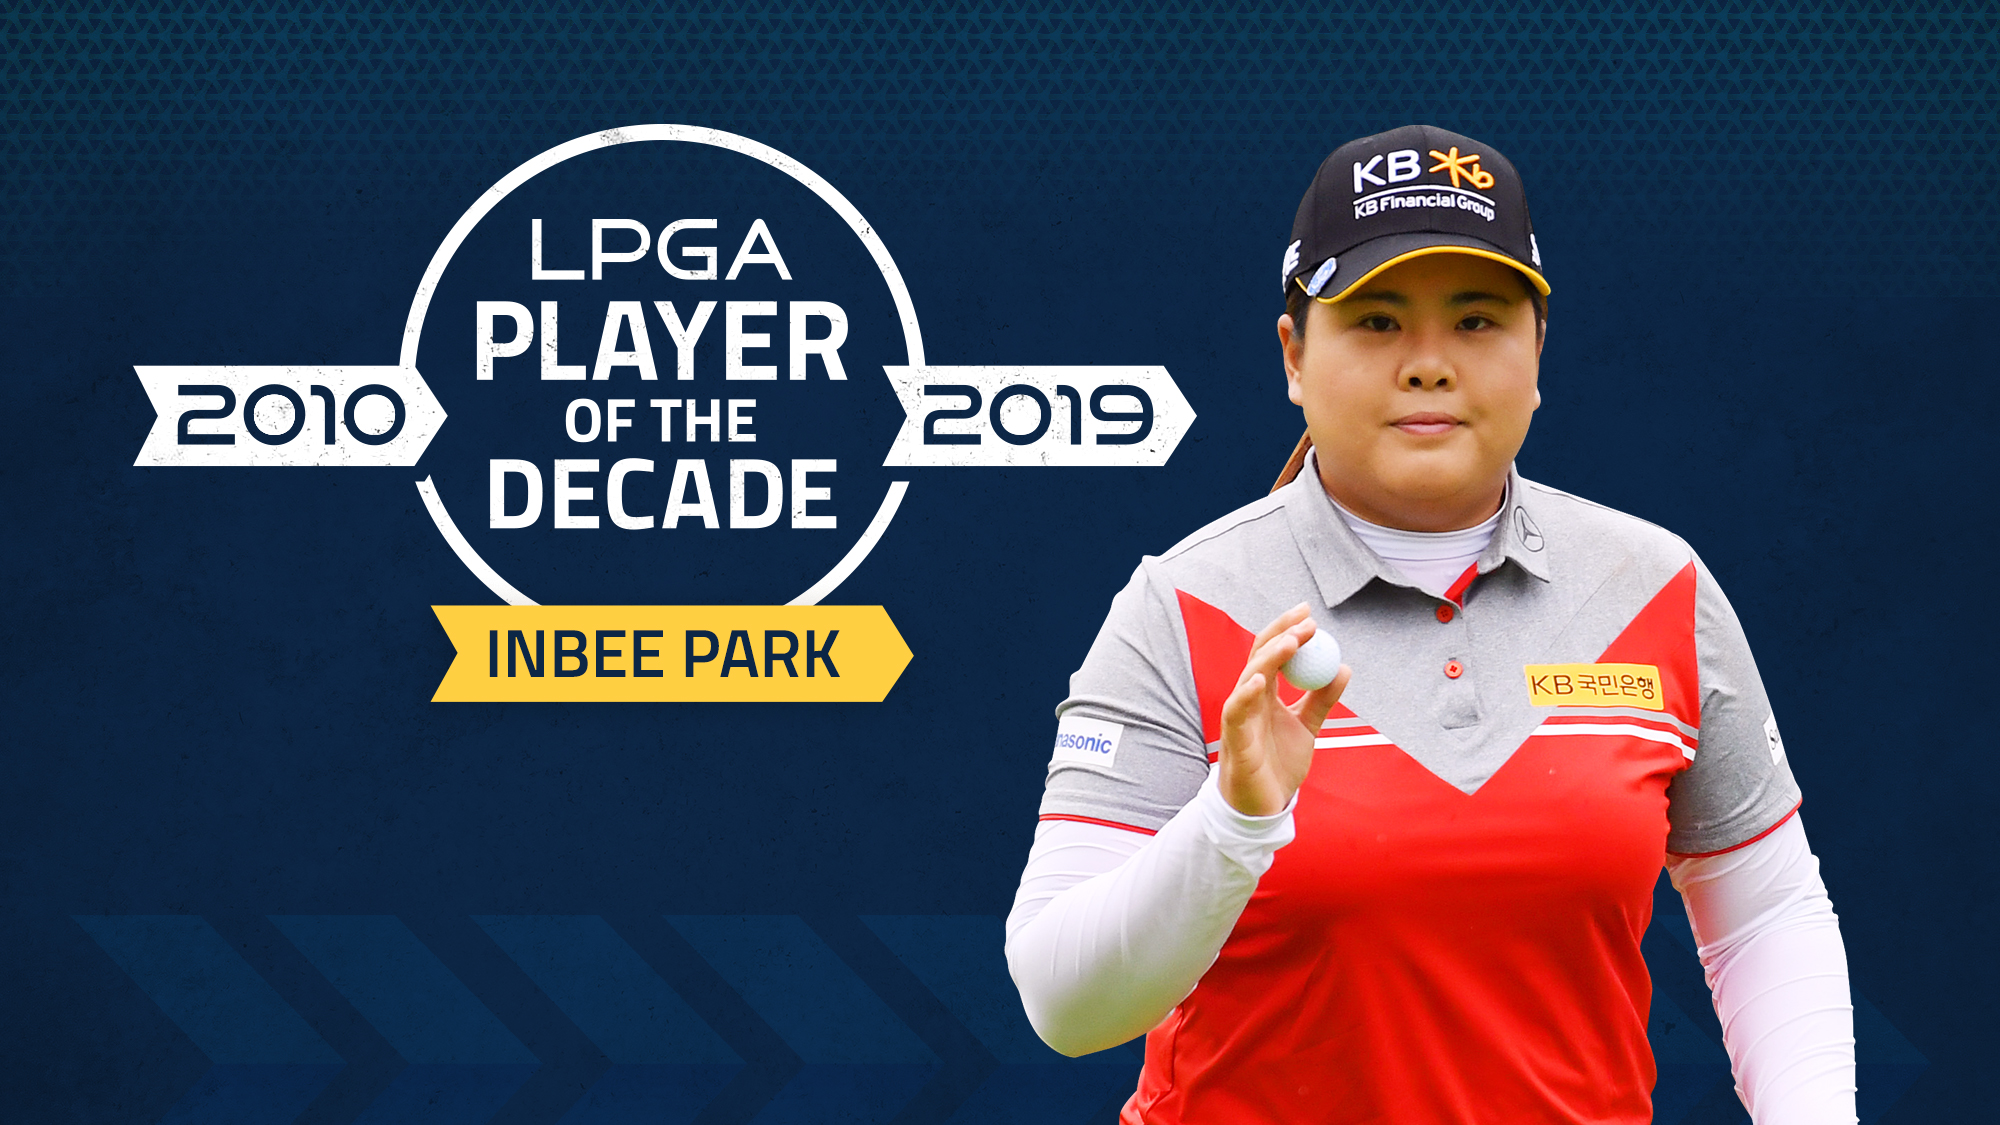 Player of the Decade | LPGA | Ladies Professional Golf Association